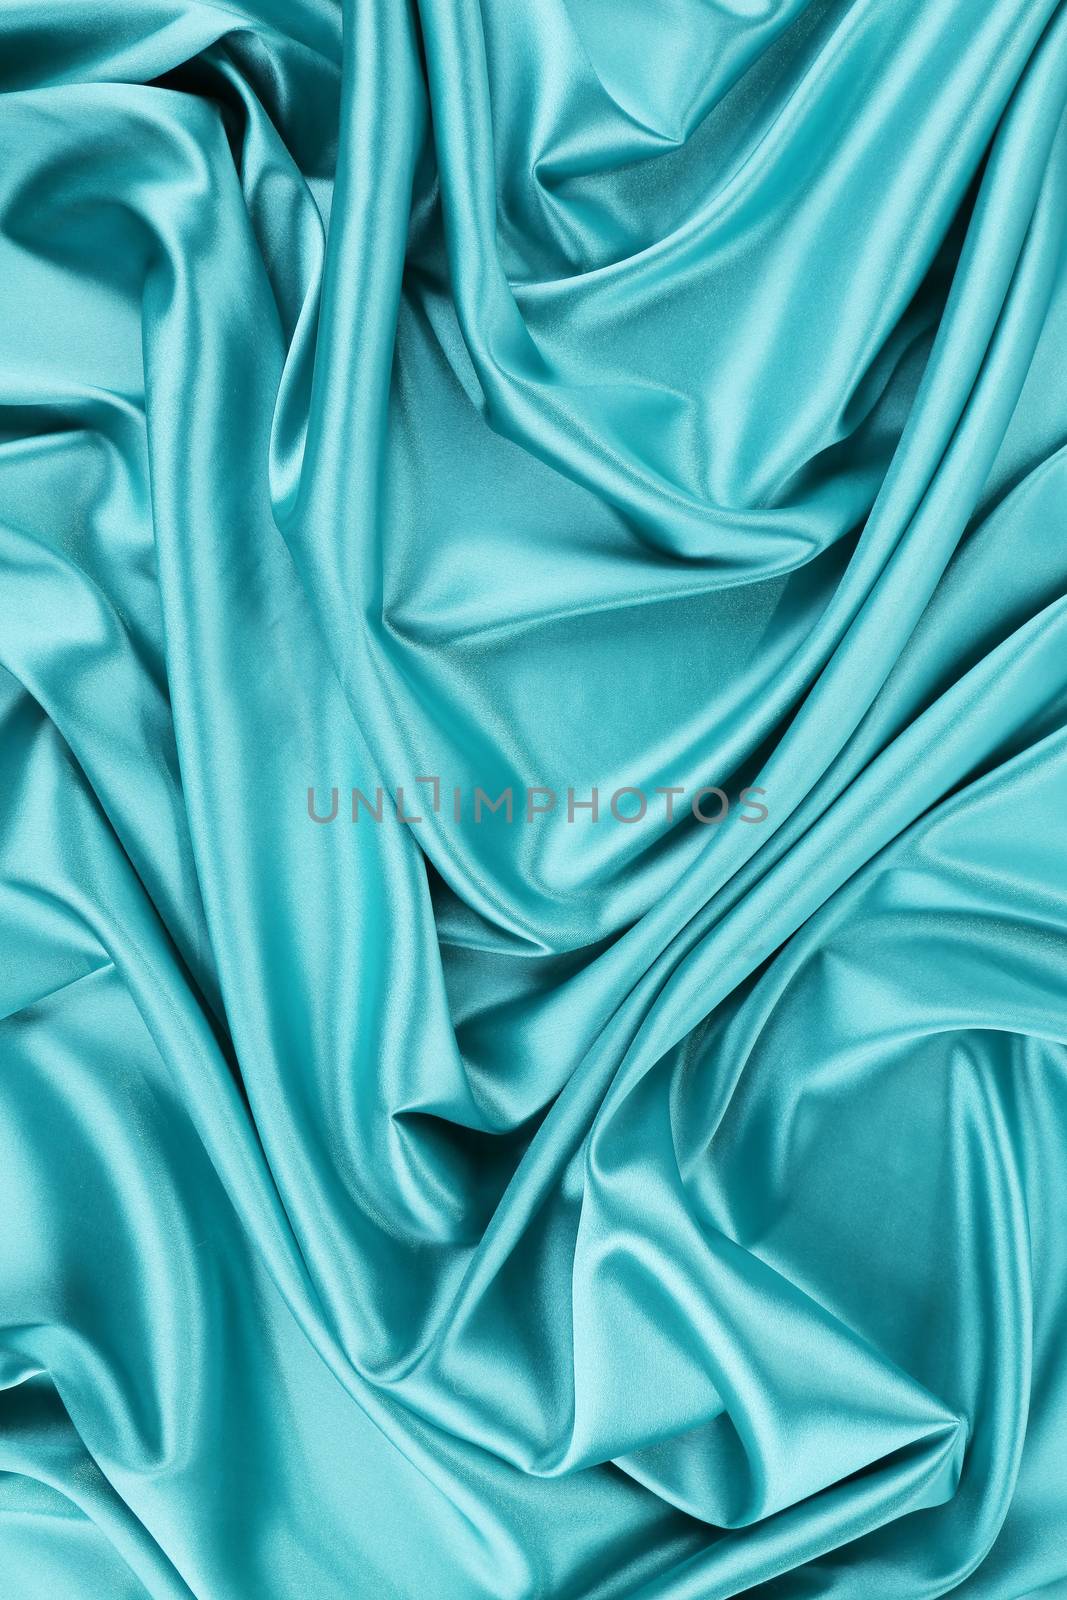 Aquamarine silk drapery. by indigolotos